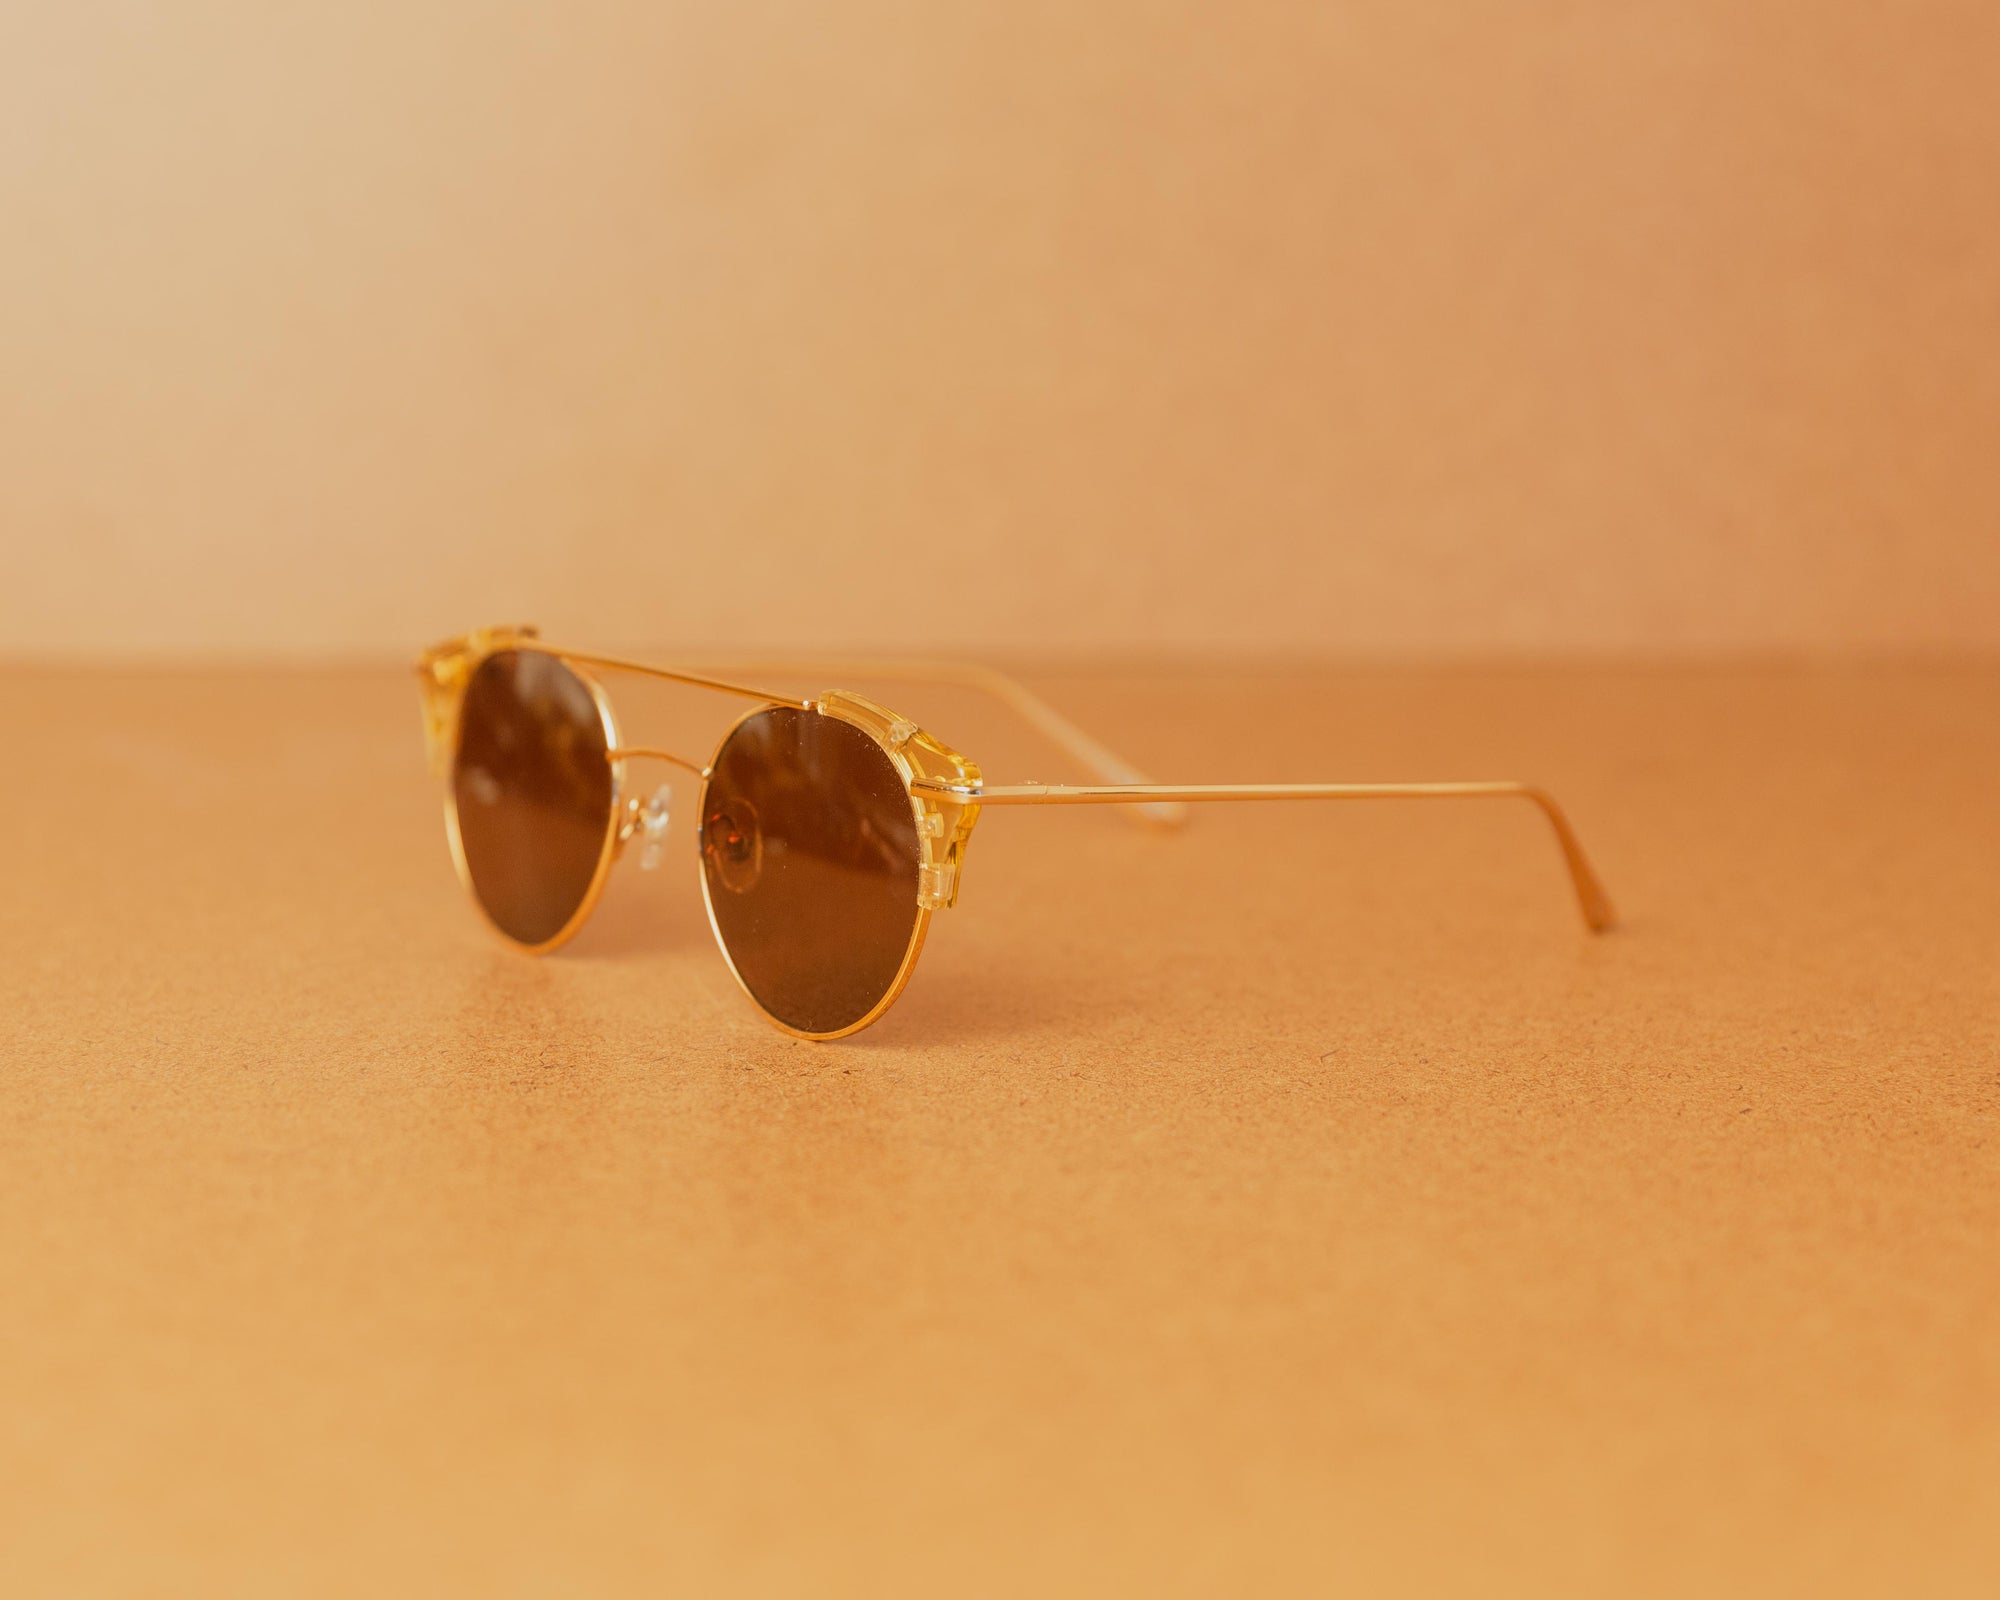 Wonderland Rialto Sunglasses in Clear Beach Glass/Bronze